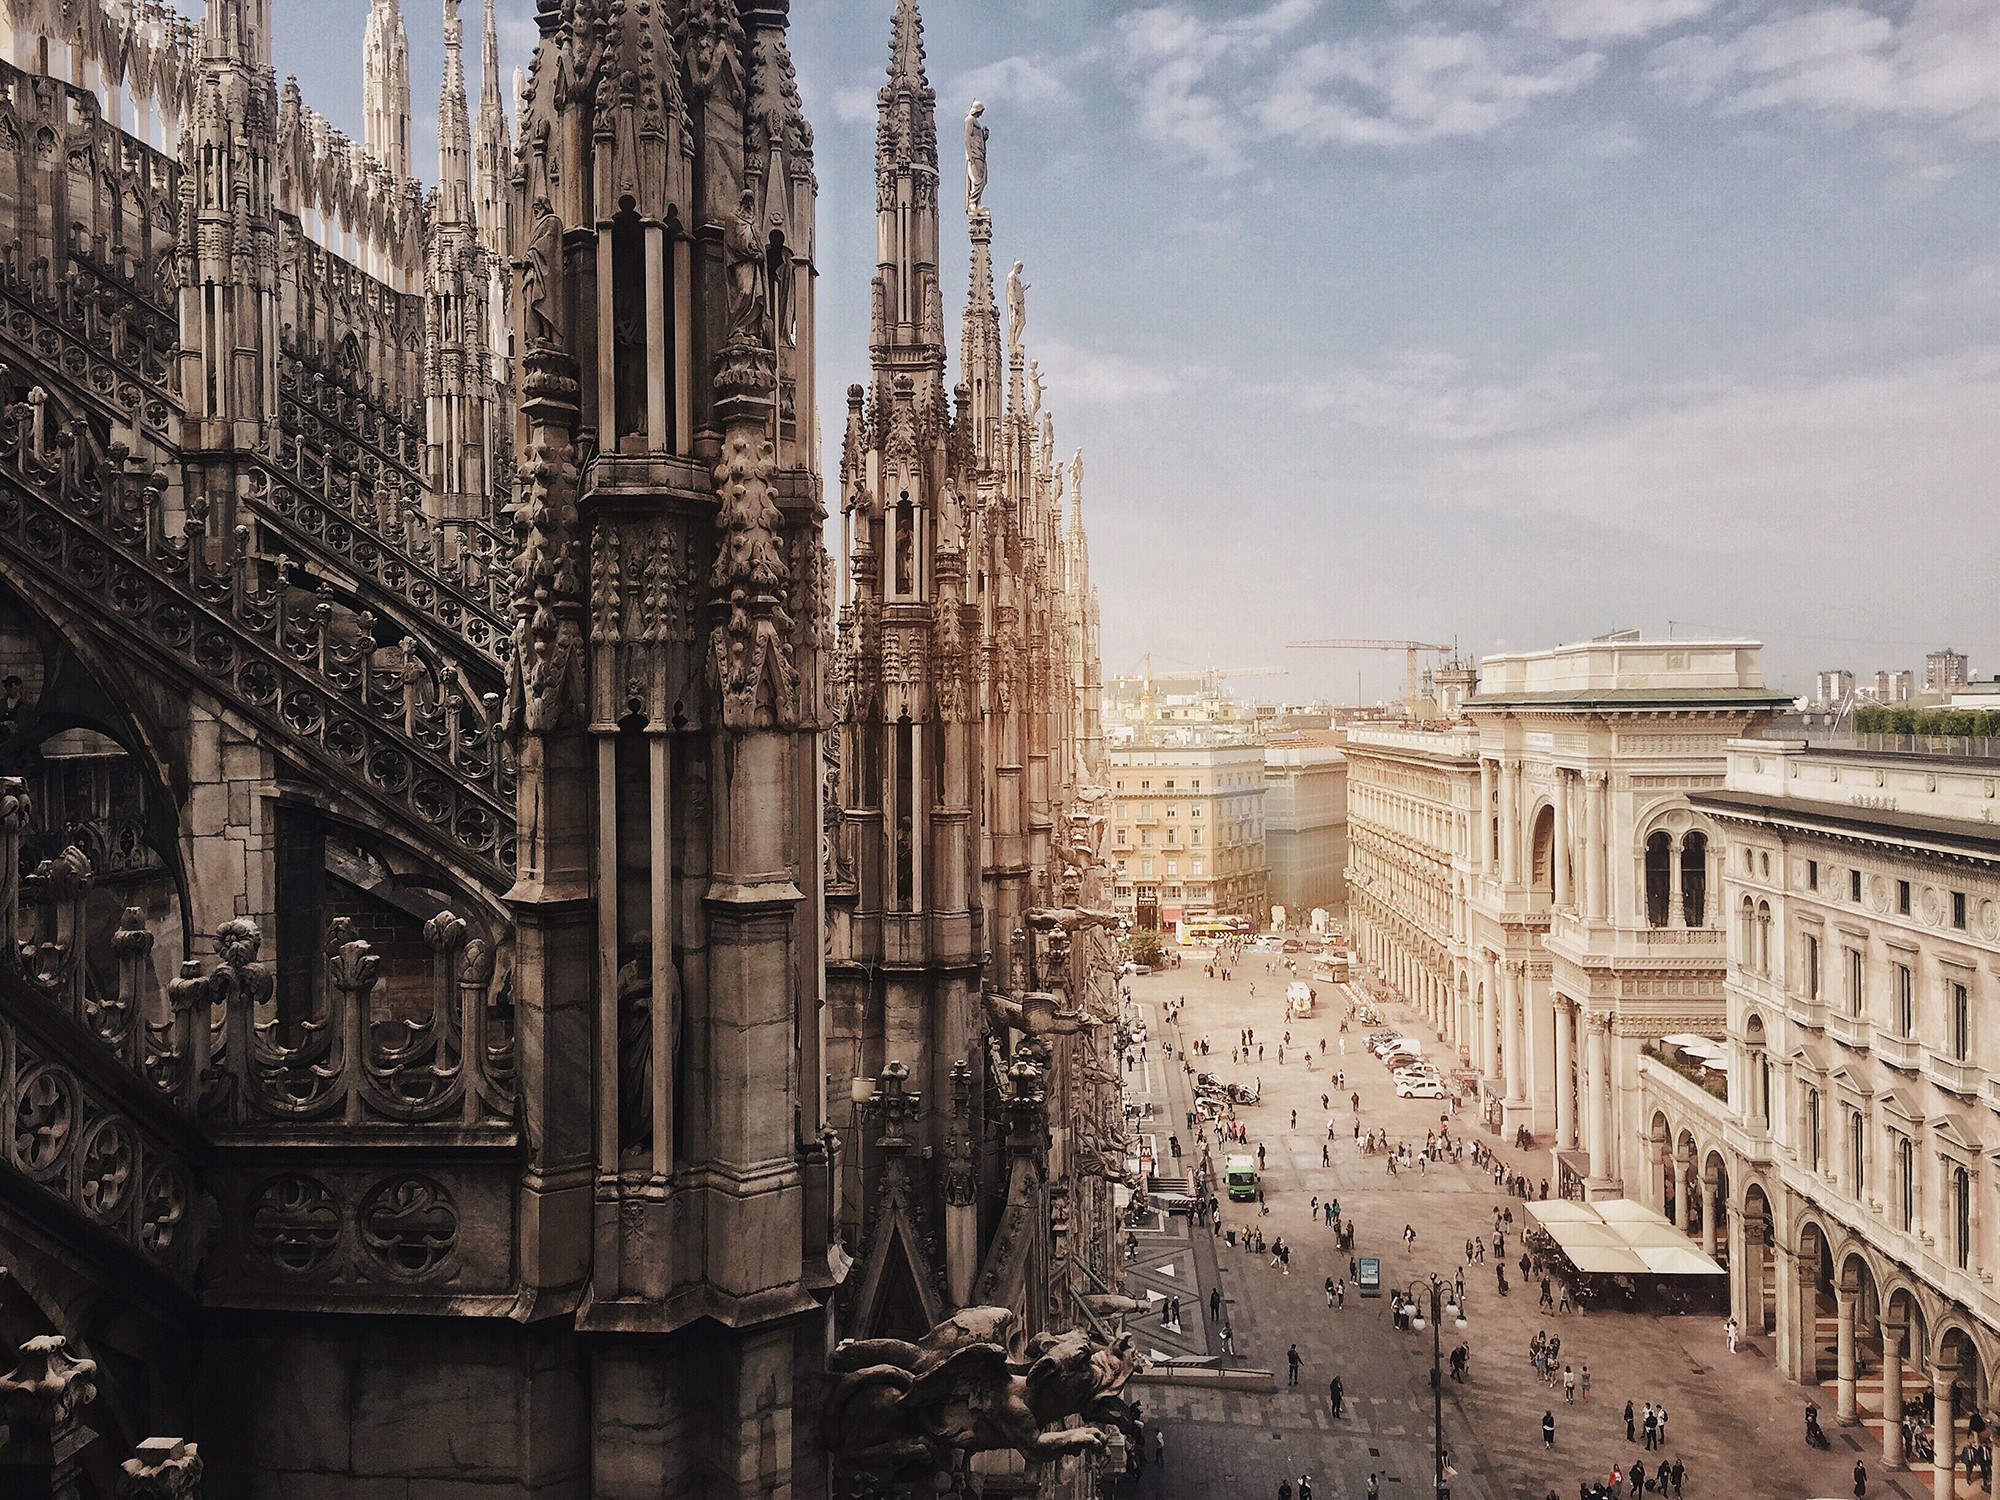 1 место в категории Архитектура, 2020. Миланский собор, Италия. Автор Хайинь Лин